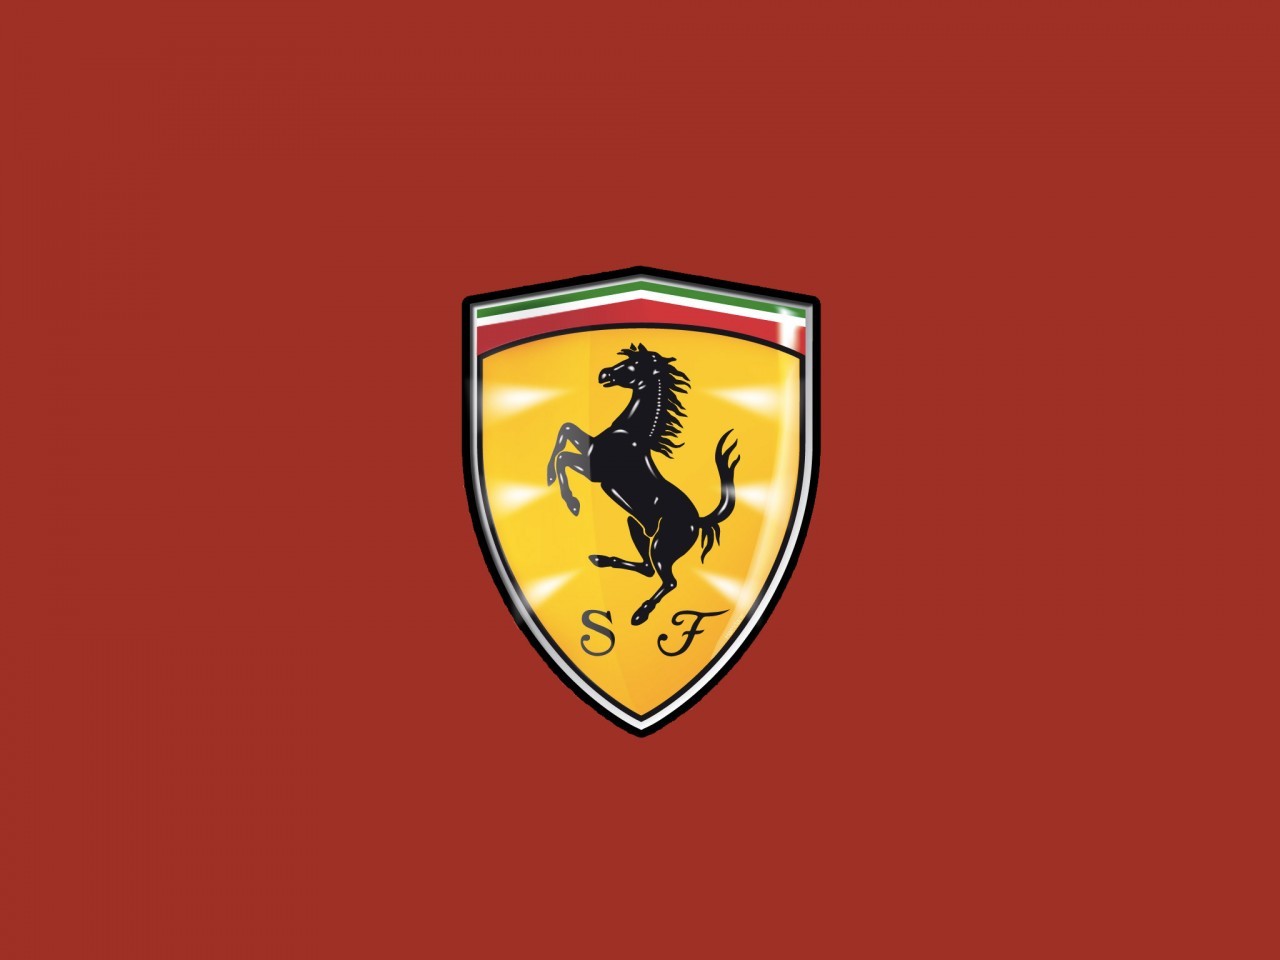 Download Ferrari Logo PNG Image for Free